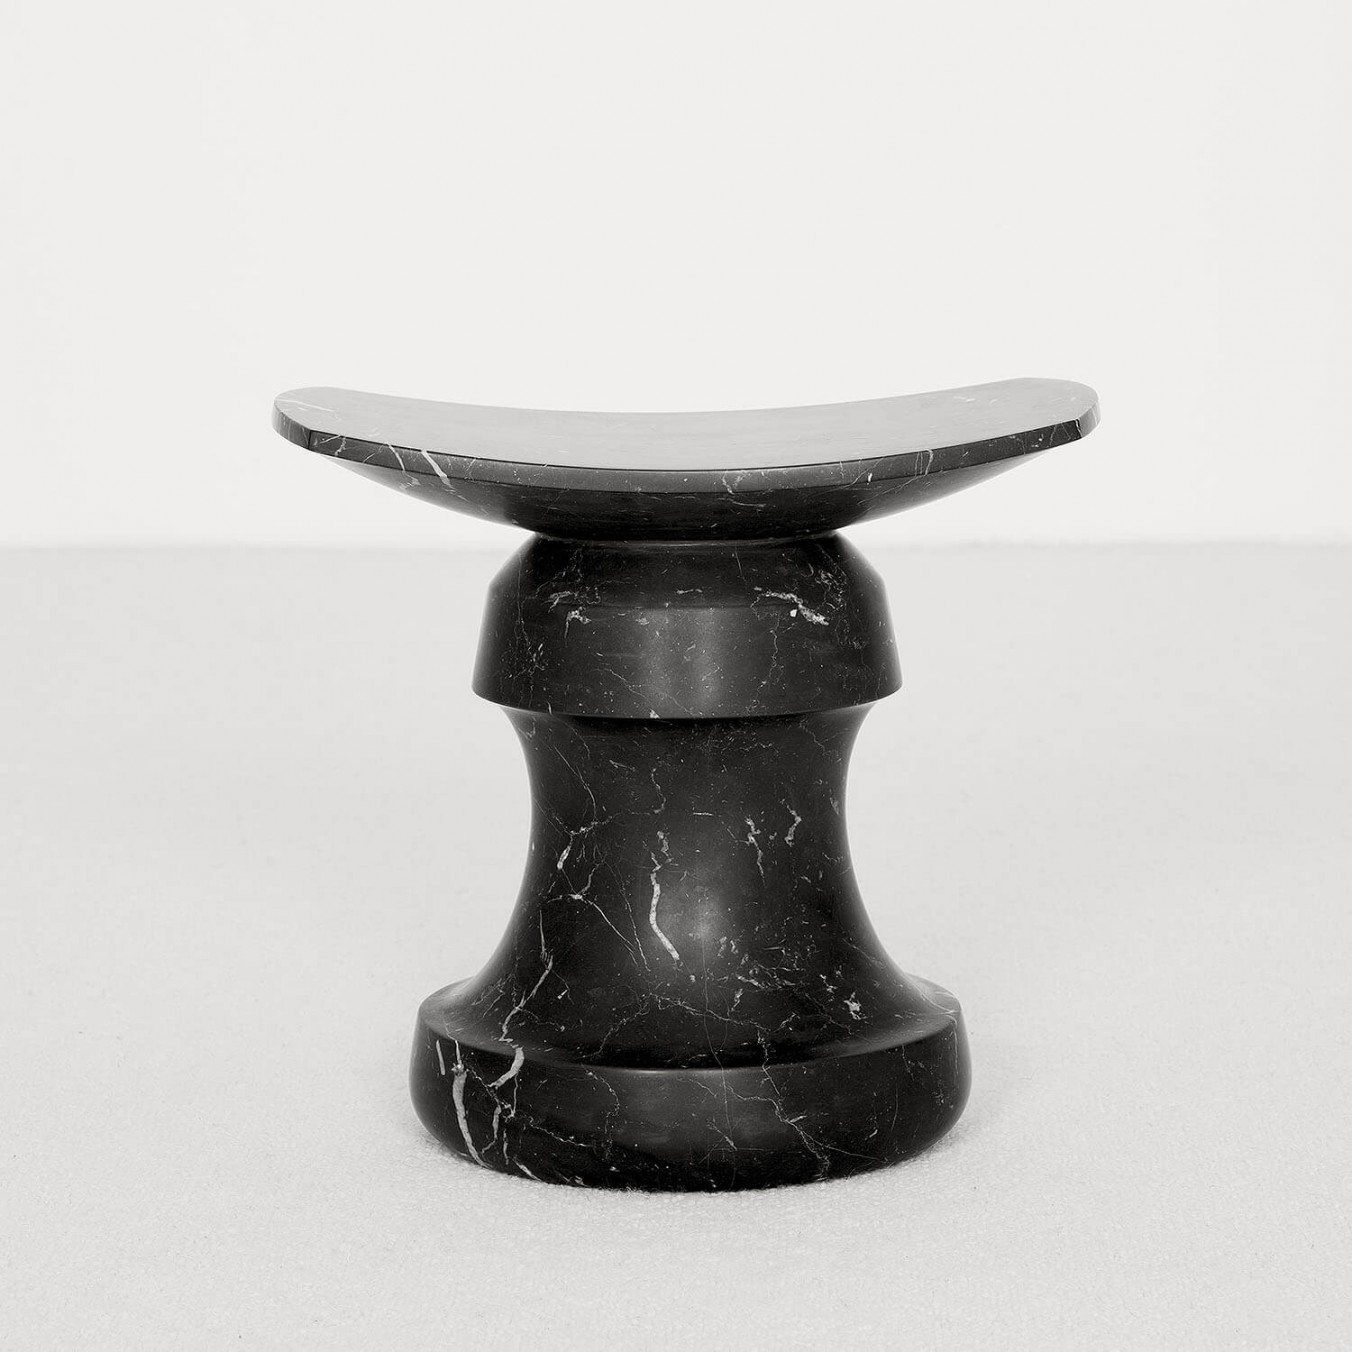 Roi stool - marble edition